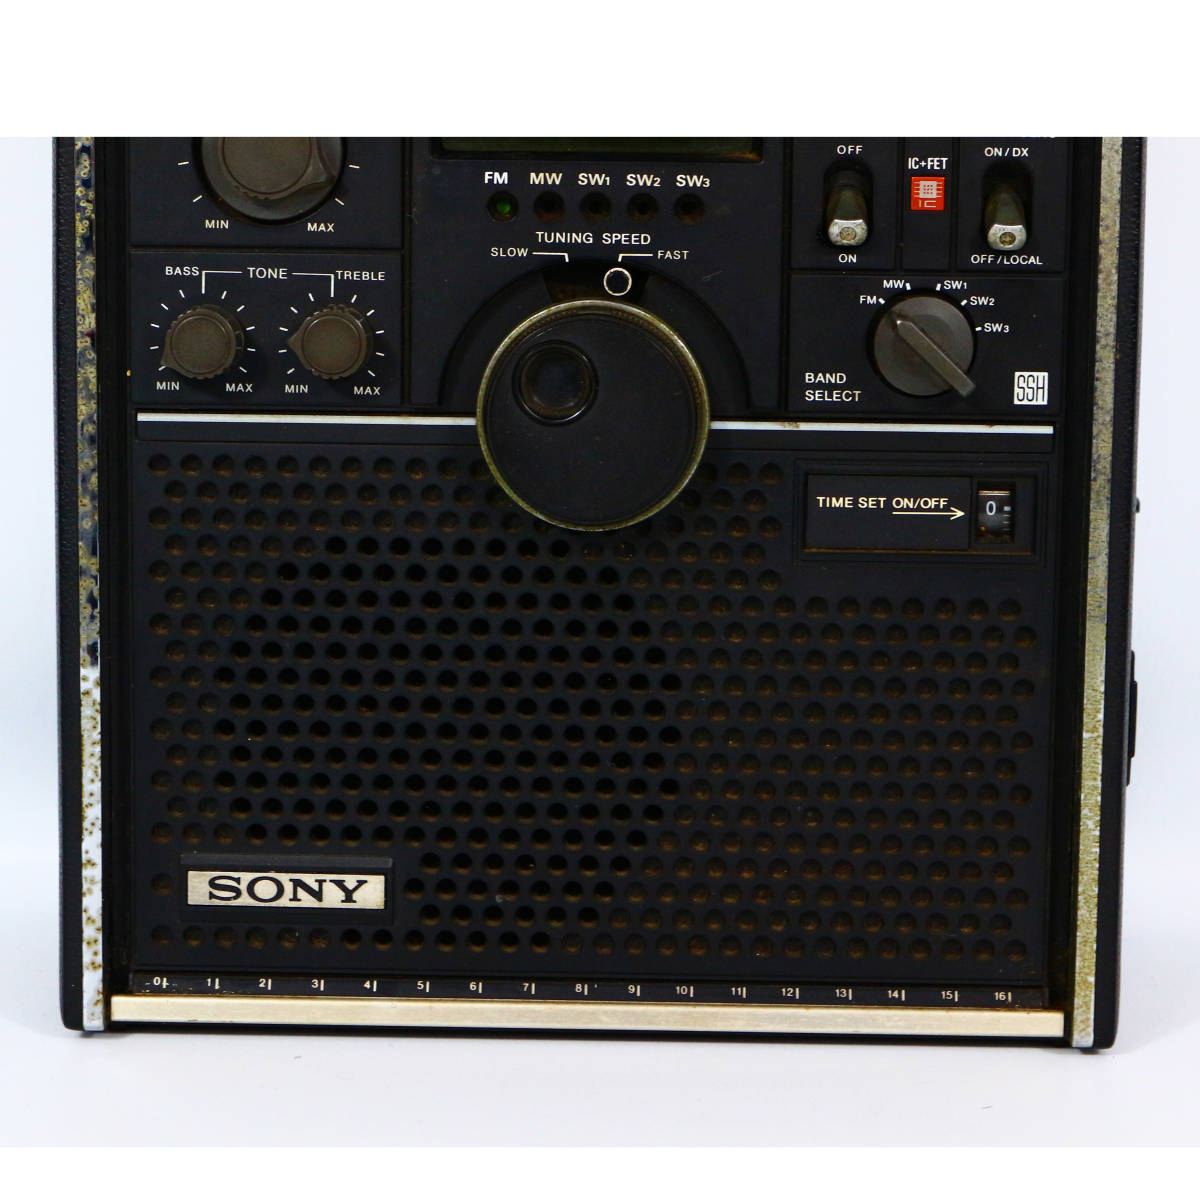 SONY ソニー スカイセンサー FM/AM 5 BAND RECEIVER ICF-5800 ラジオの画像3